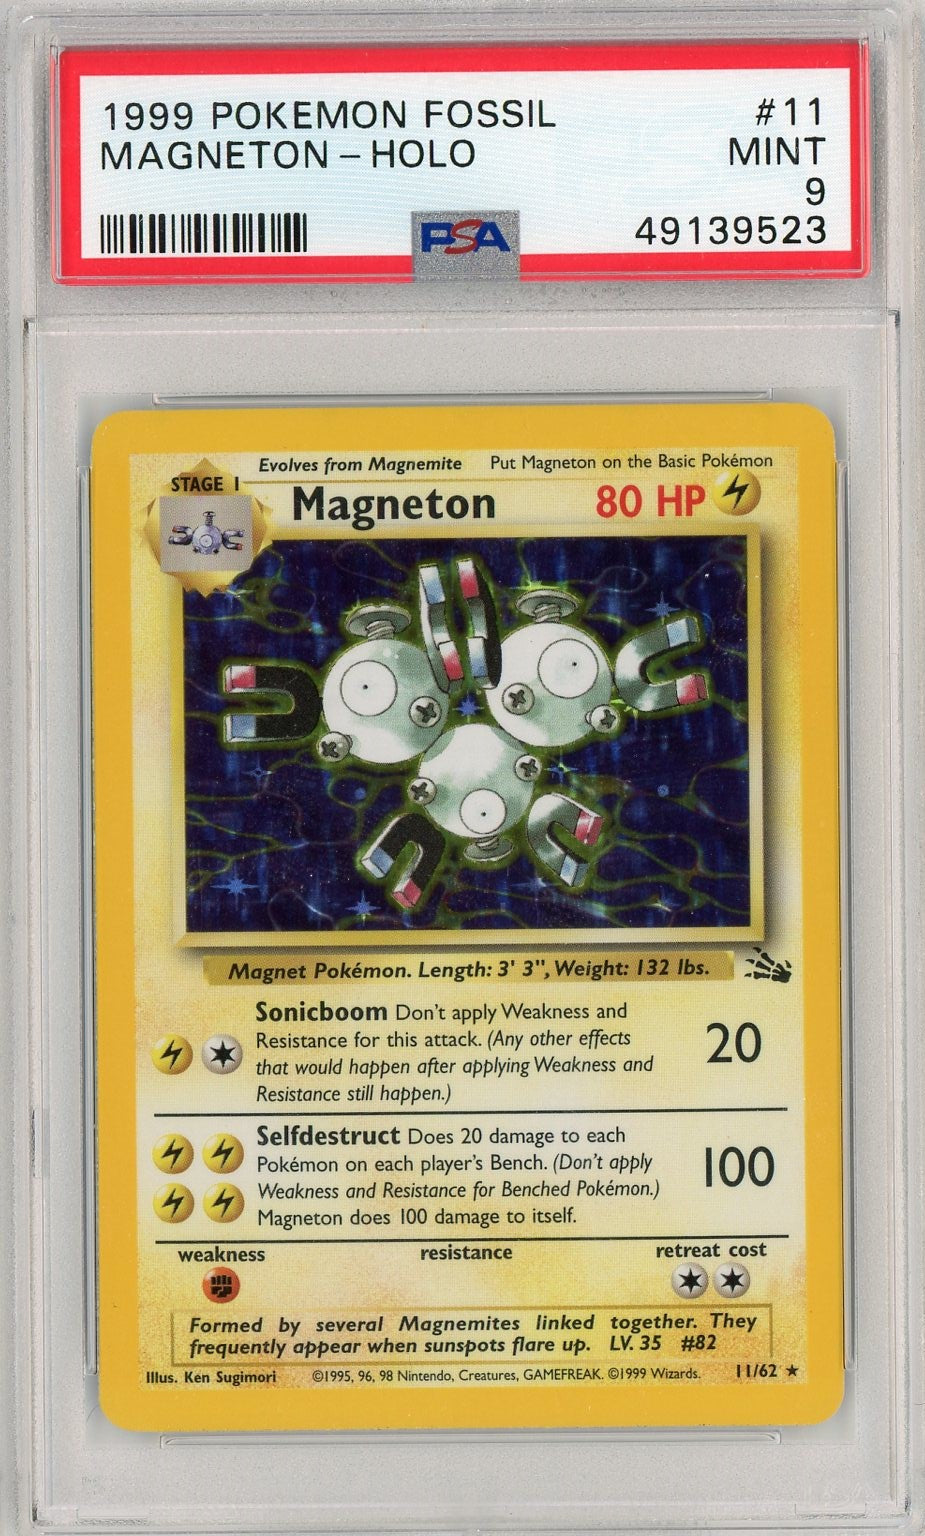 PSA 9 MINT - Magneton 11/62 (Holo) - Fossil 1999